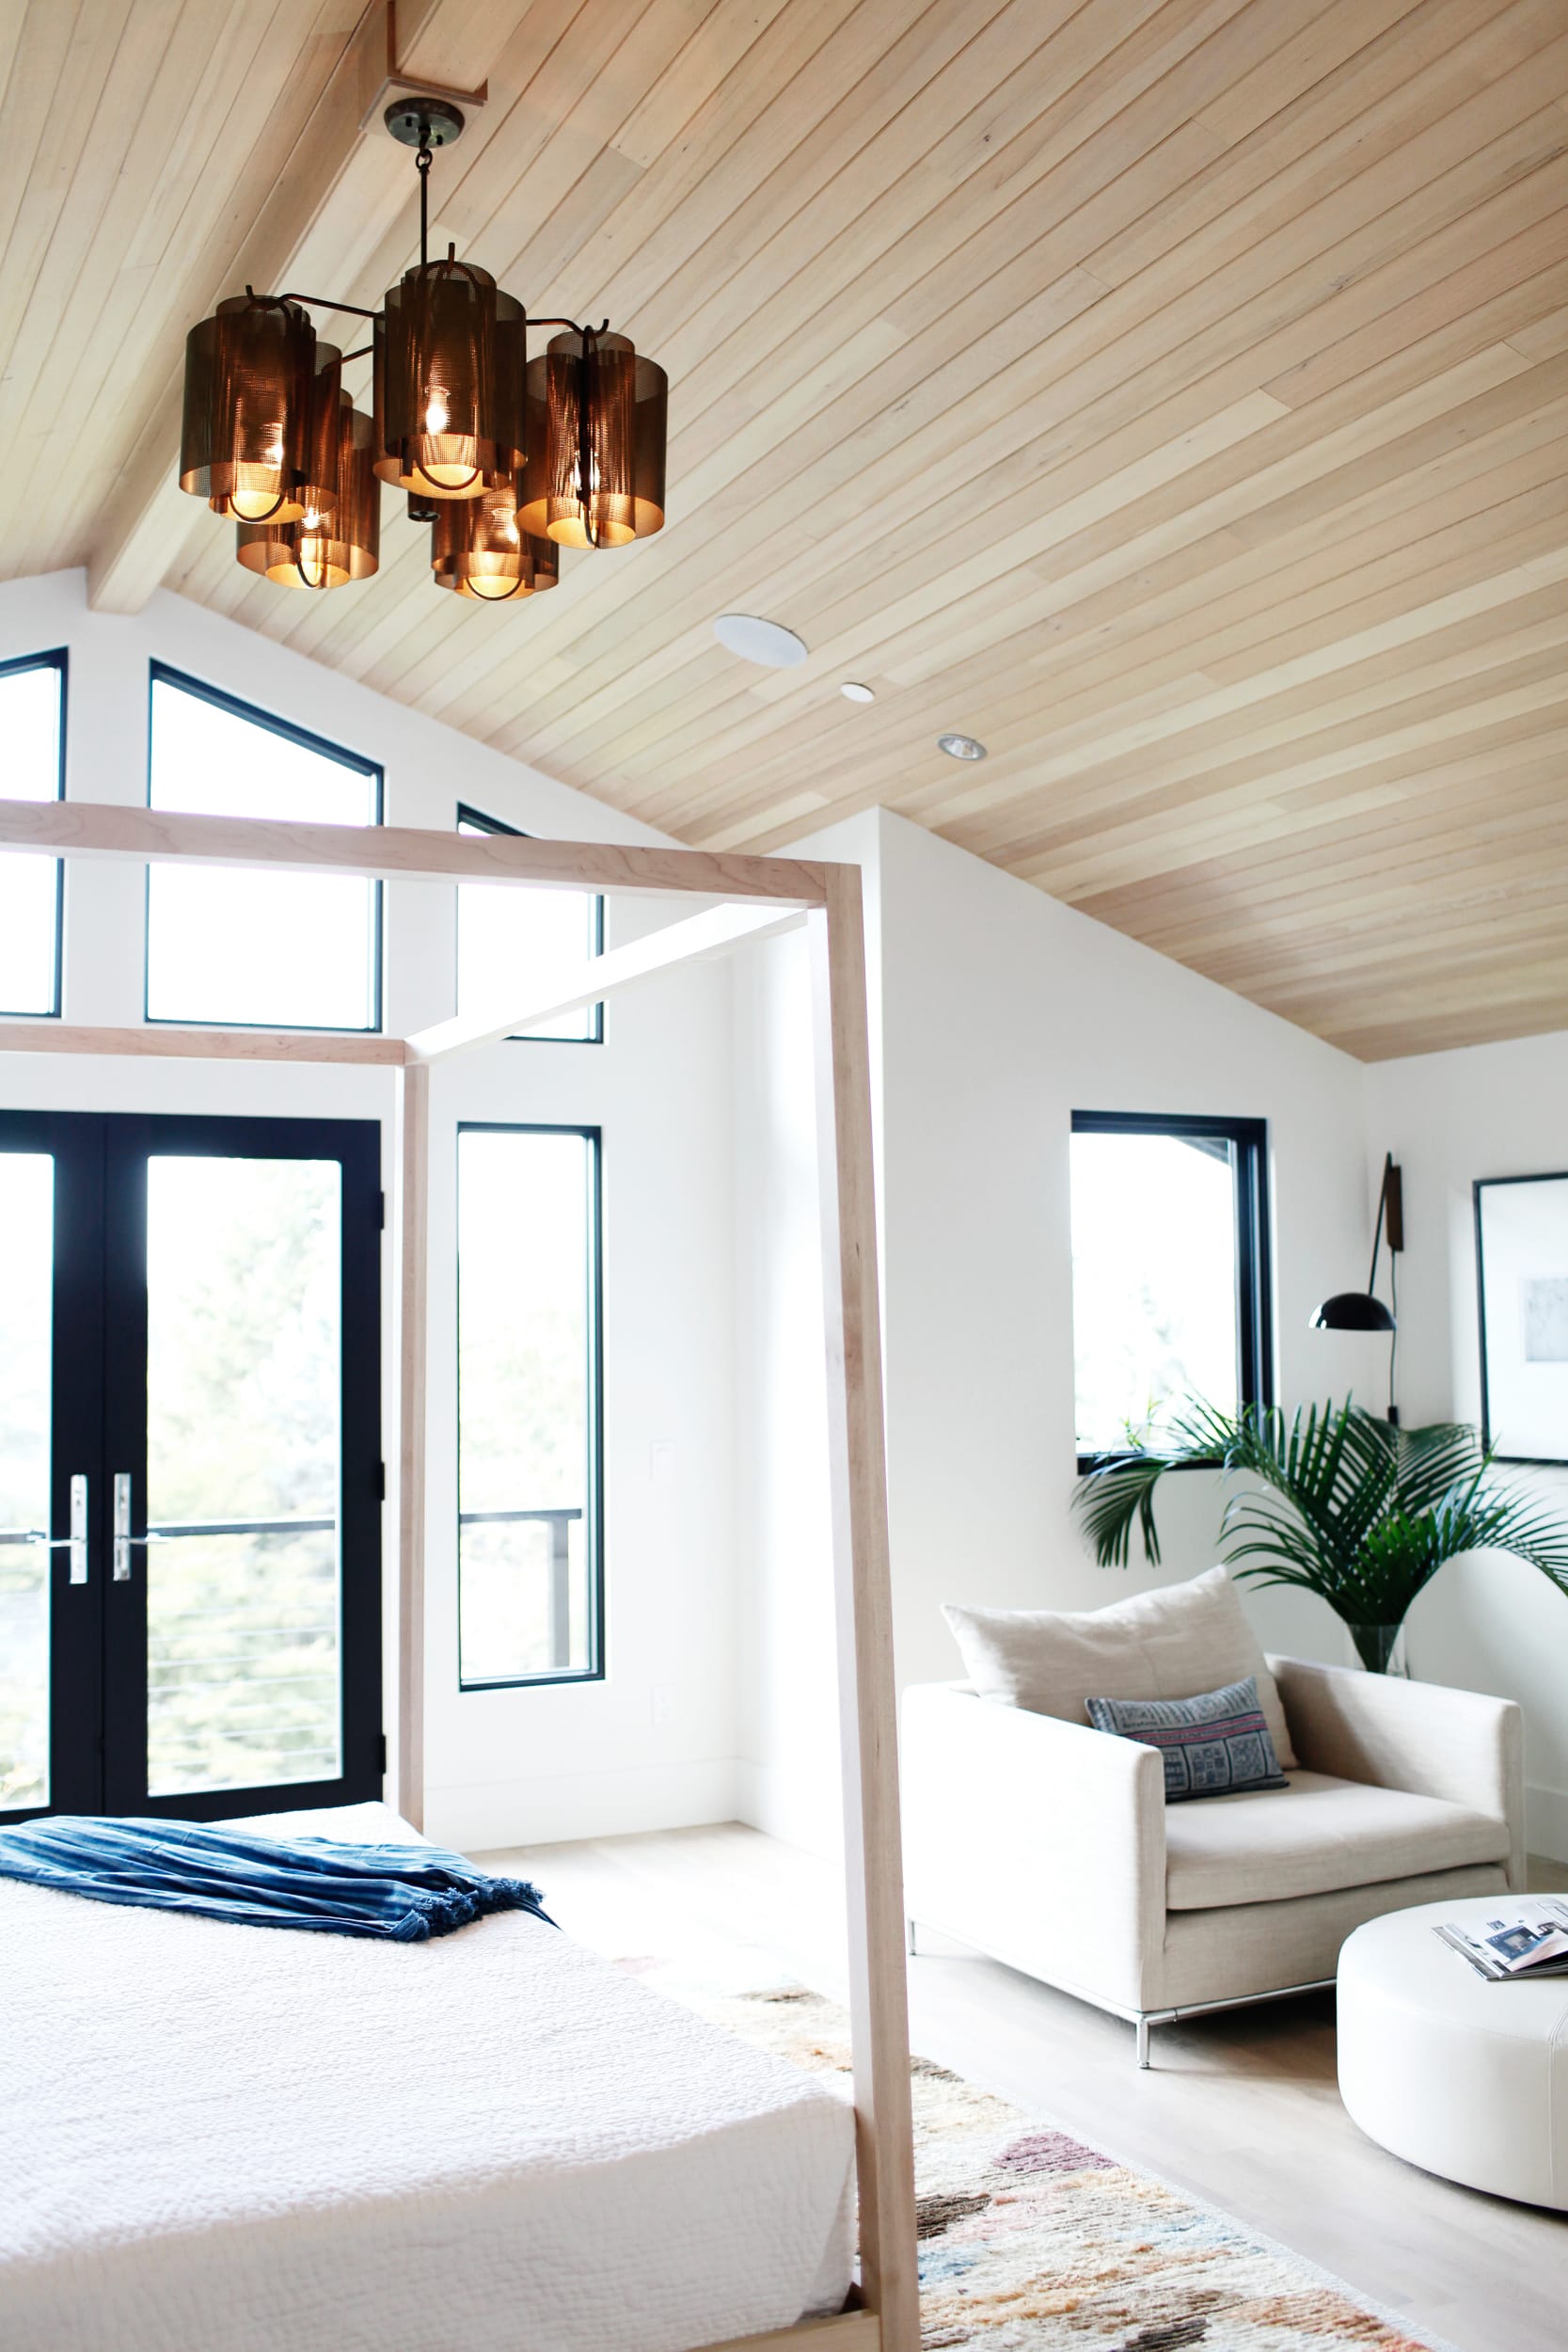 Wood paneled ceiling in master bedroom